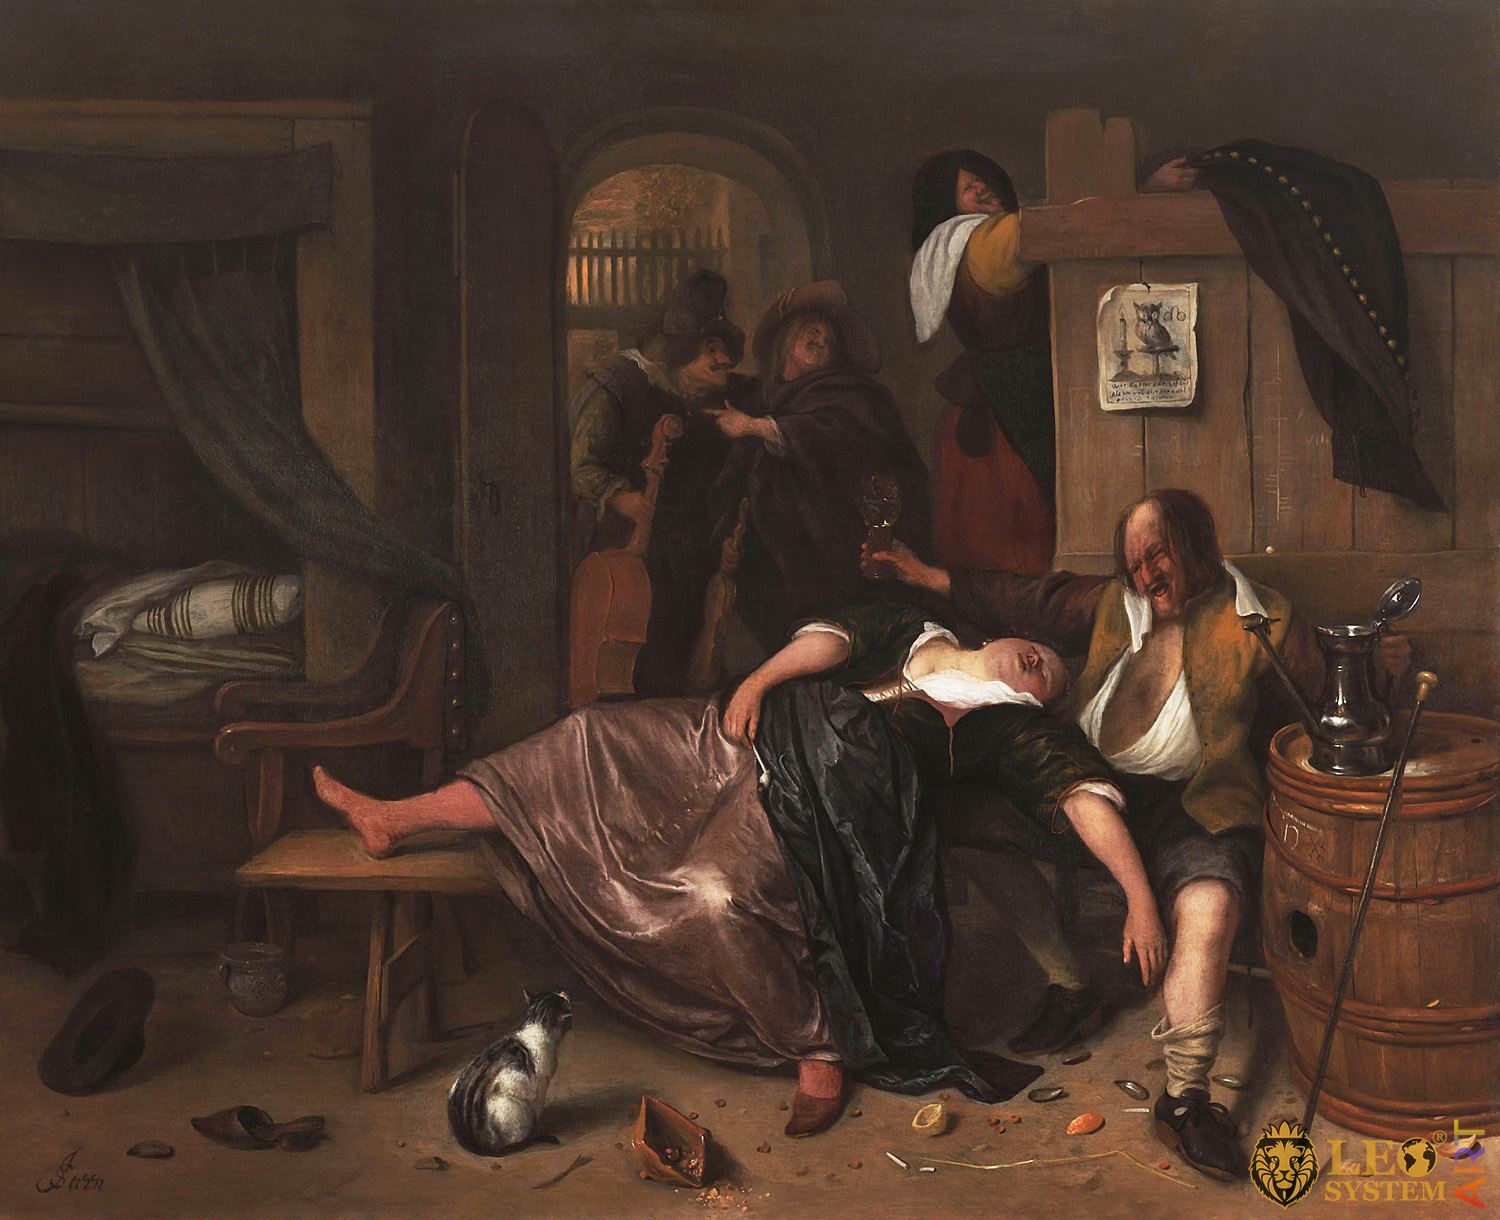 The Drunken Couple, Painter: Jan Steen, 1655, Amsterdam, Netherlands, Original painting